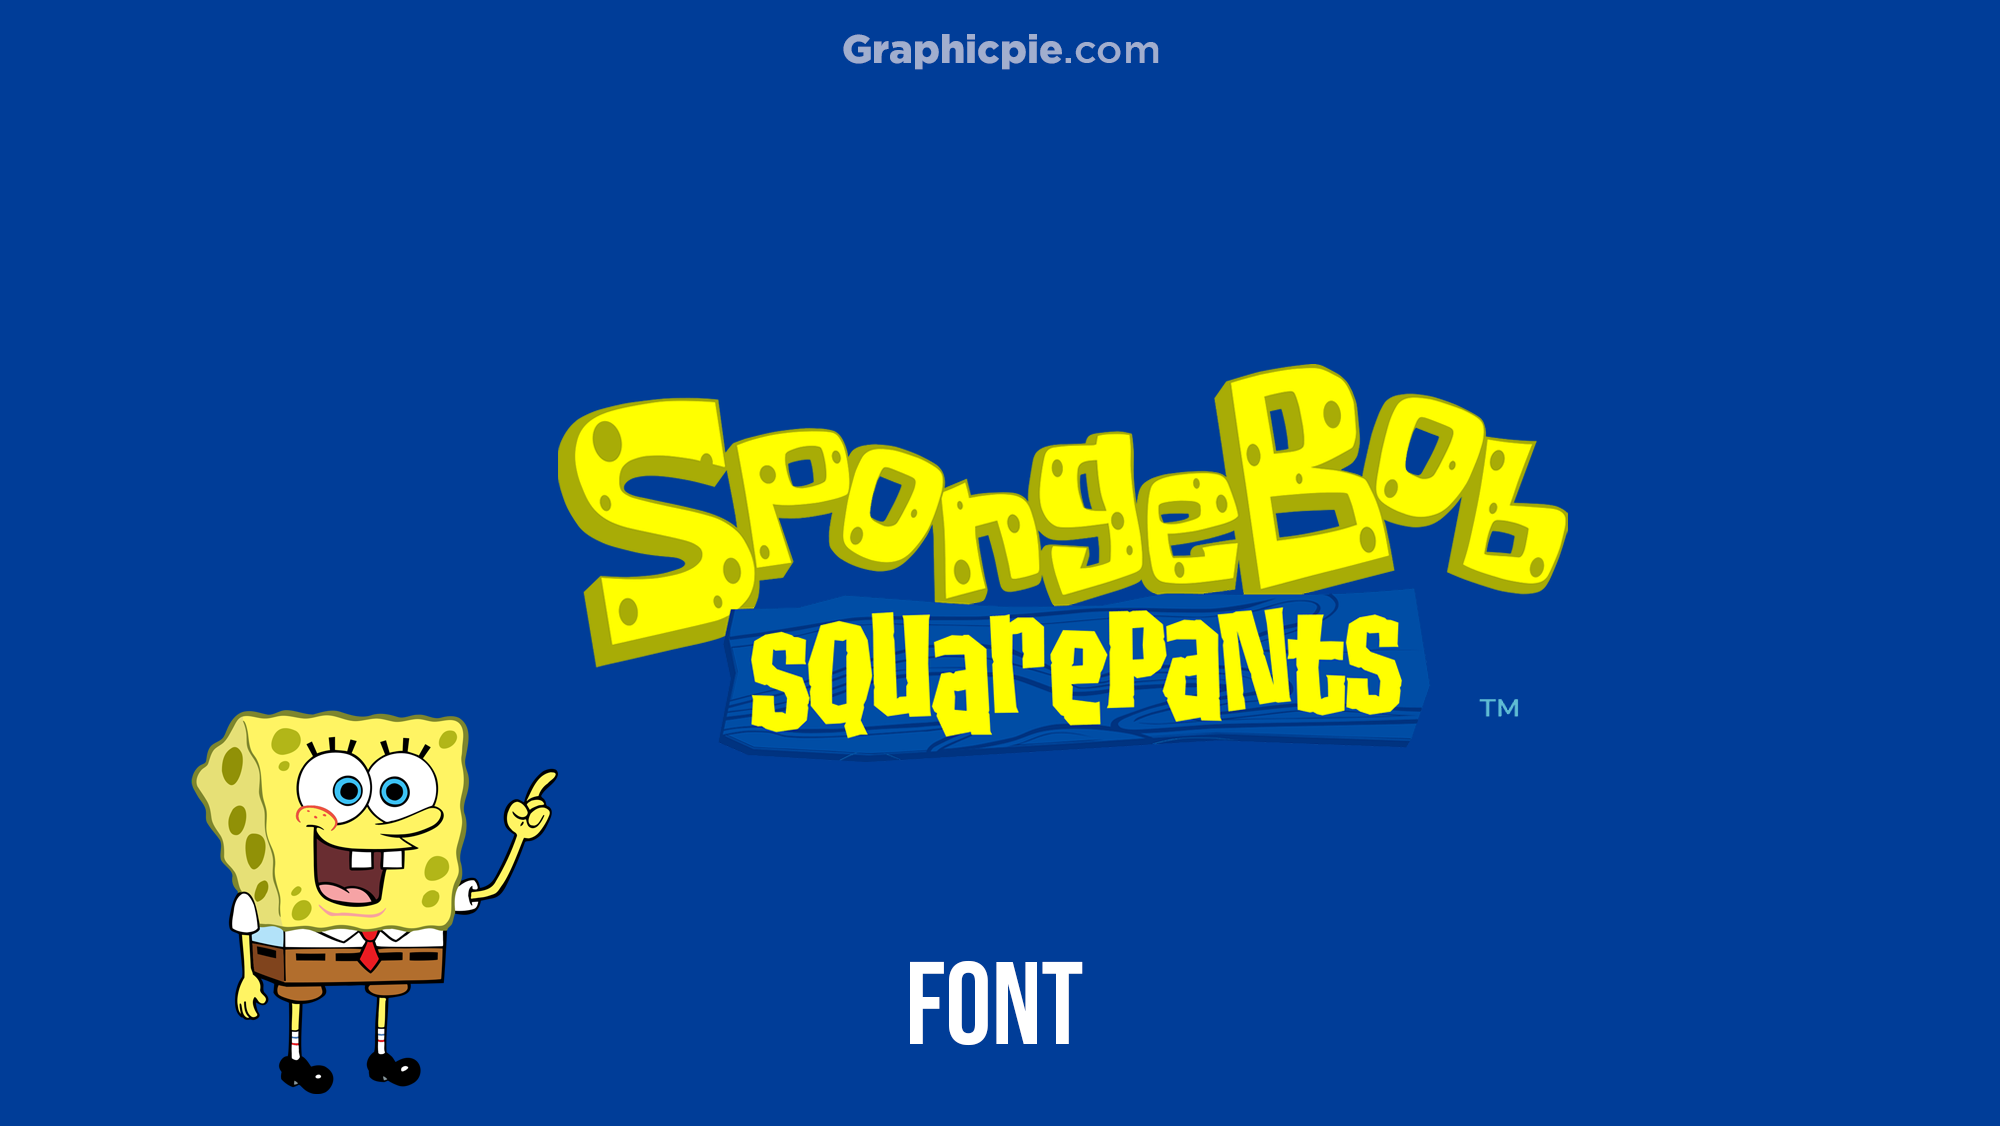 spongebob text art copy and paste